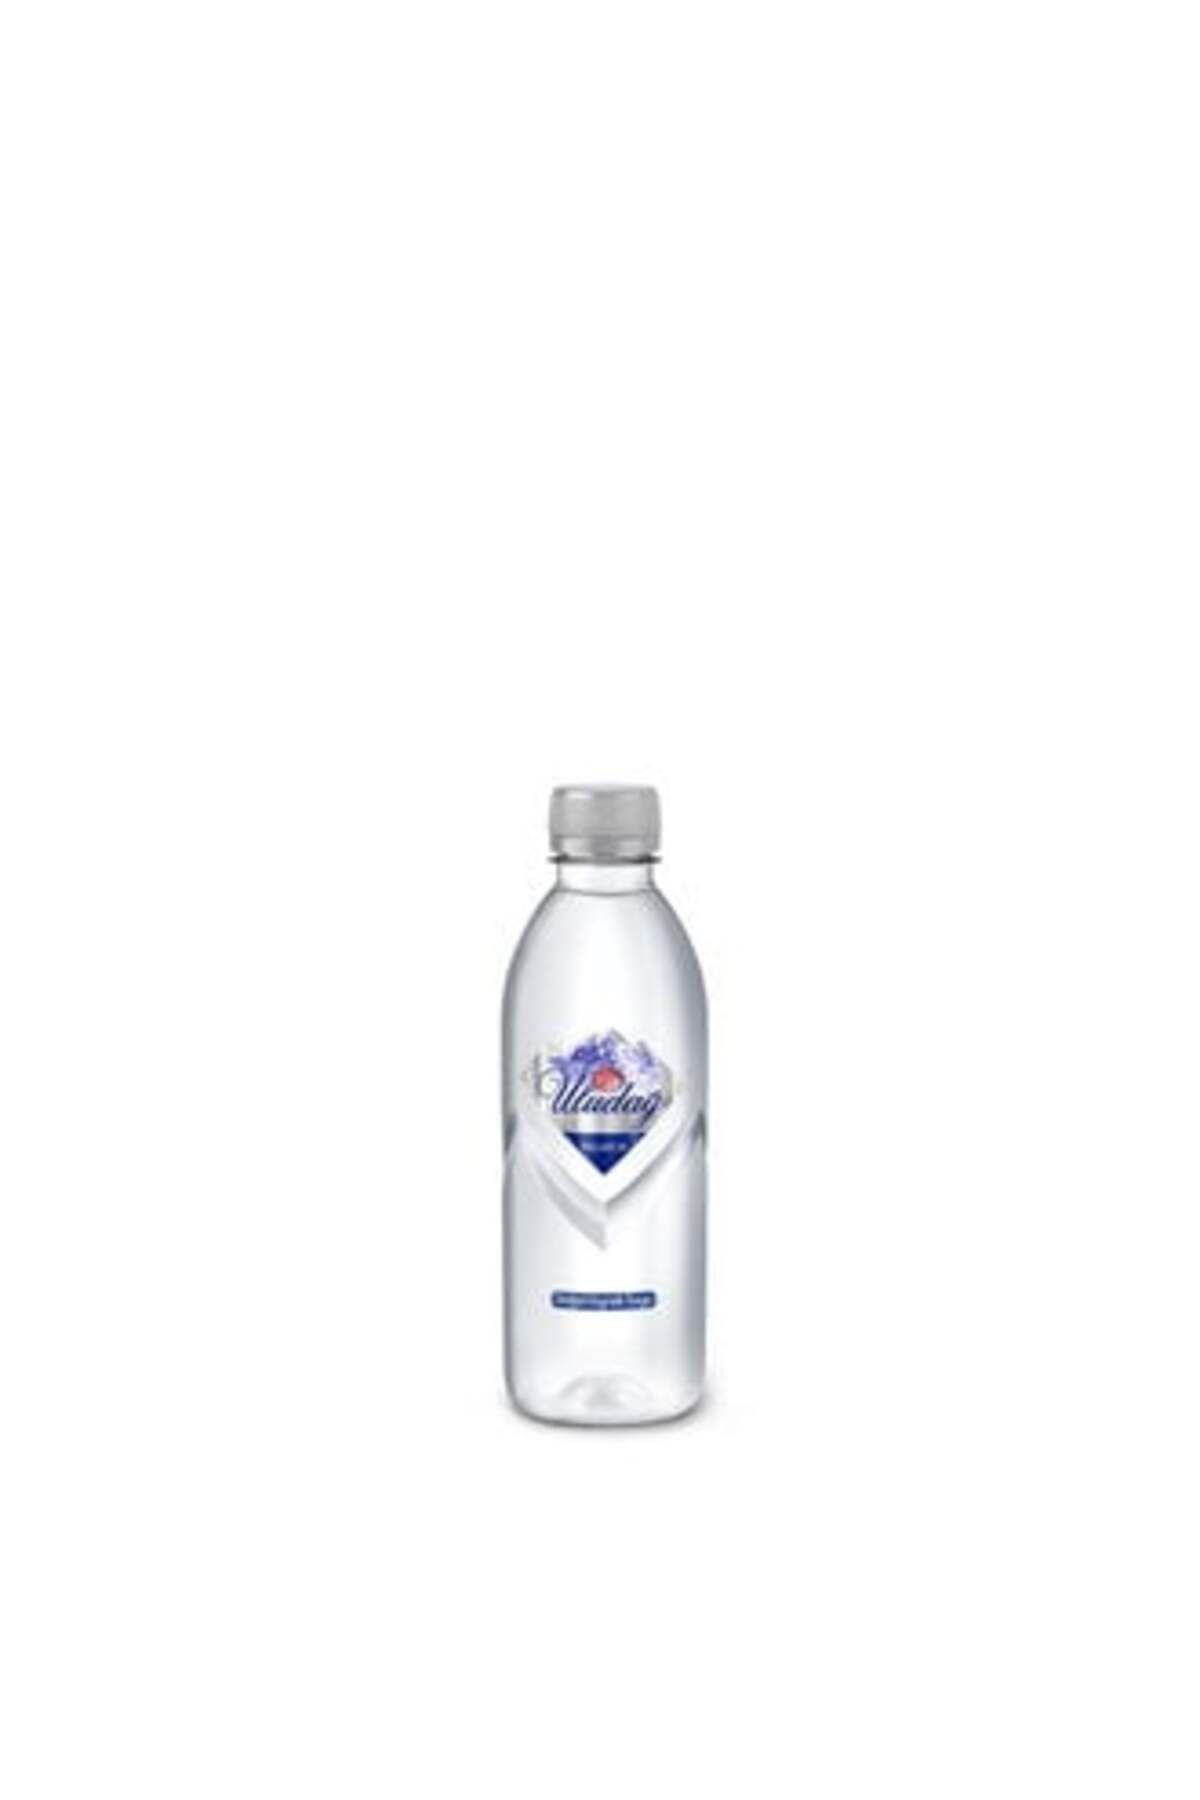 Uludağ Premium Doğal Kaynak Suyu 400 Ml Pet ( 5 ADET )